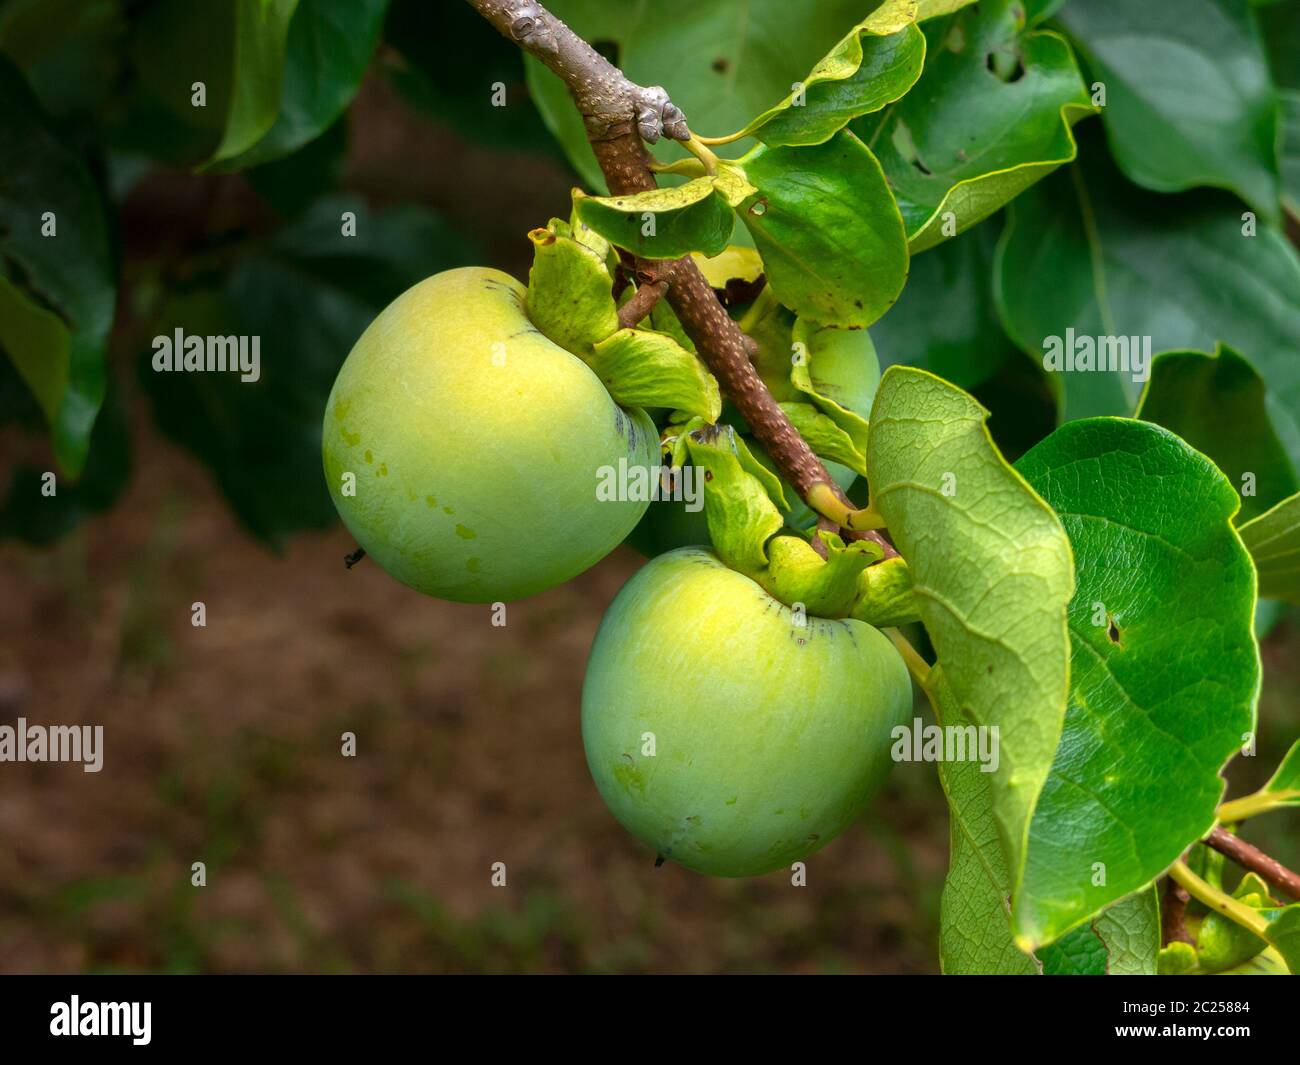 Not Mature green Kaki (Khaki, Persimmon) fruits on tree Stock Photo